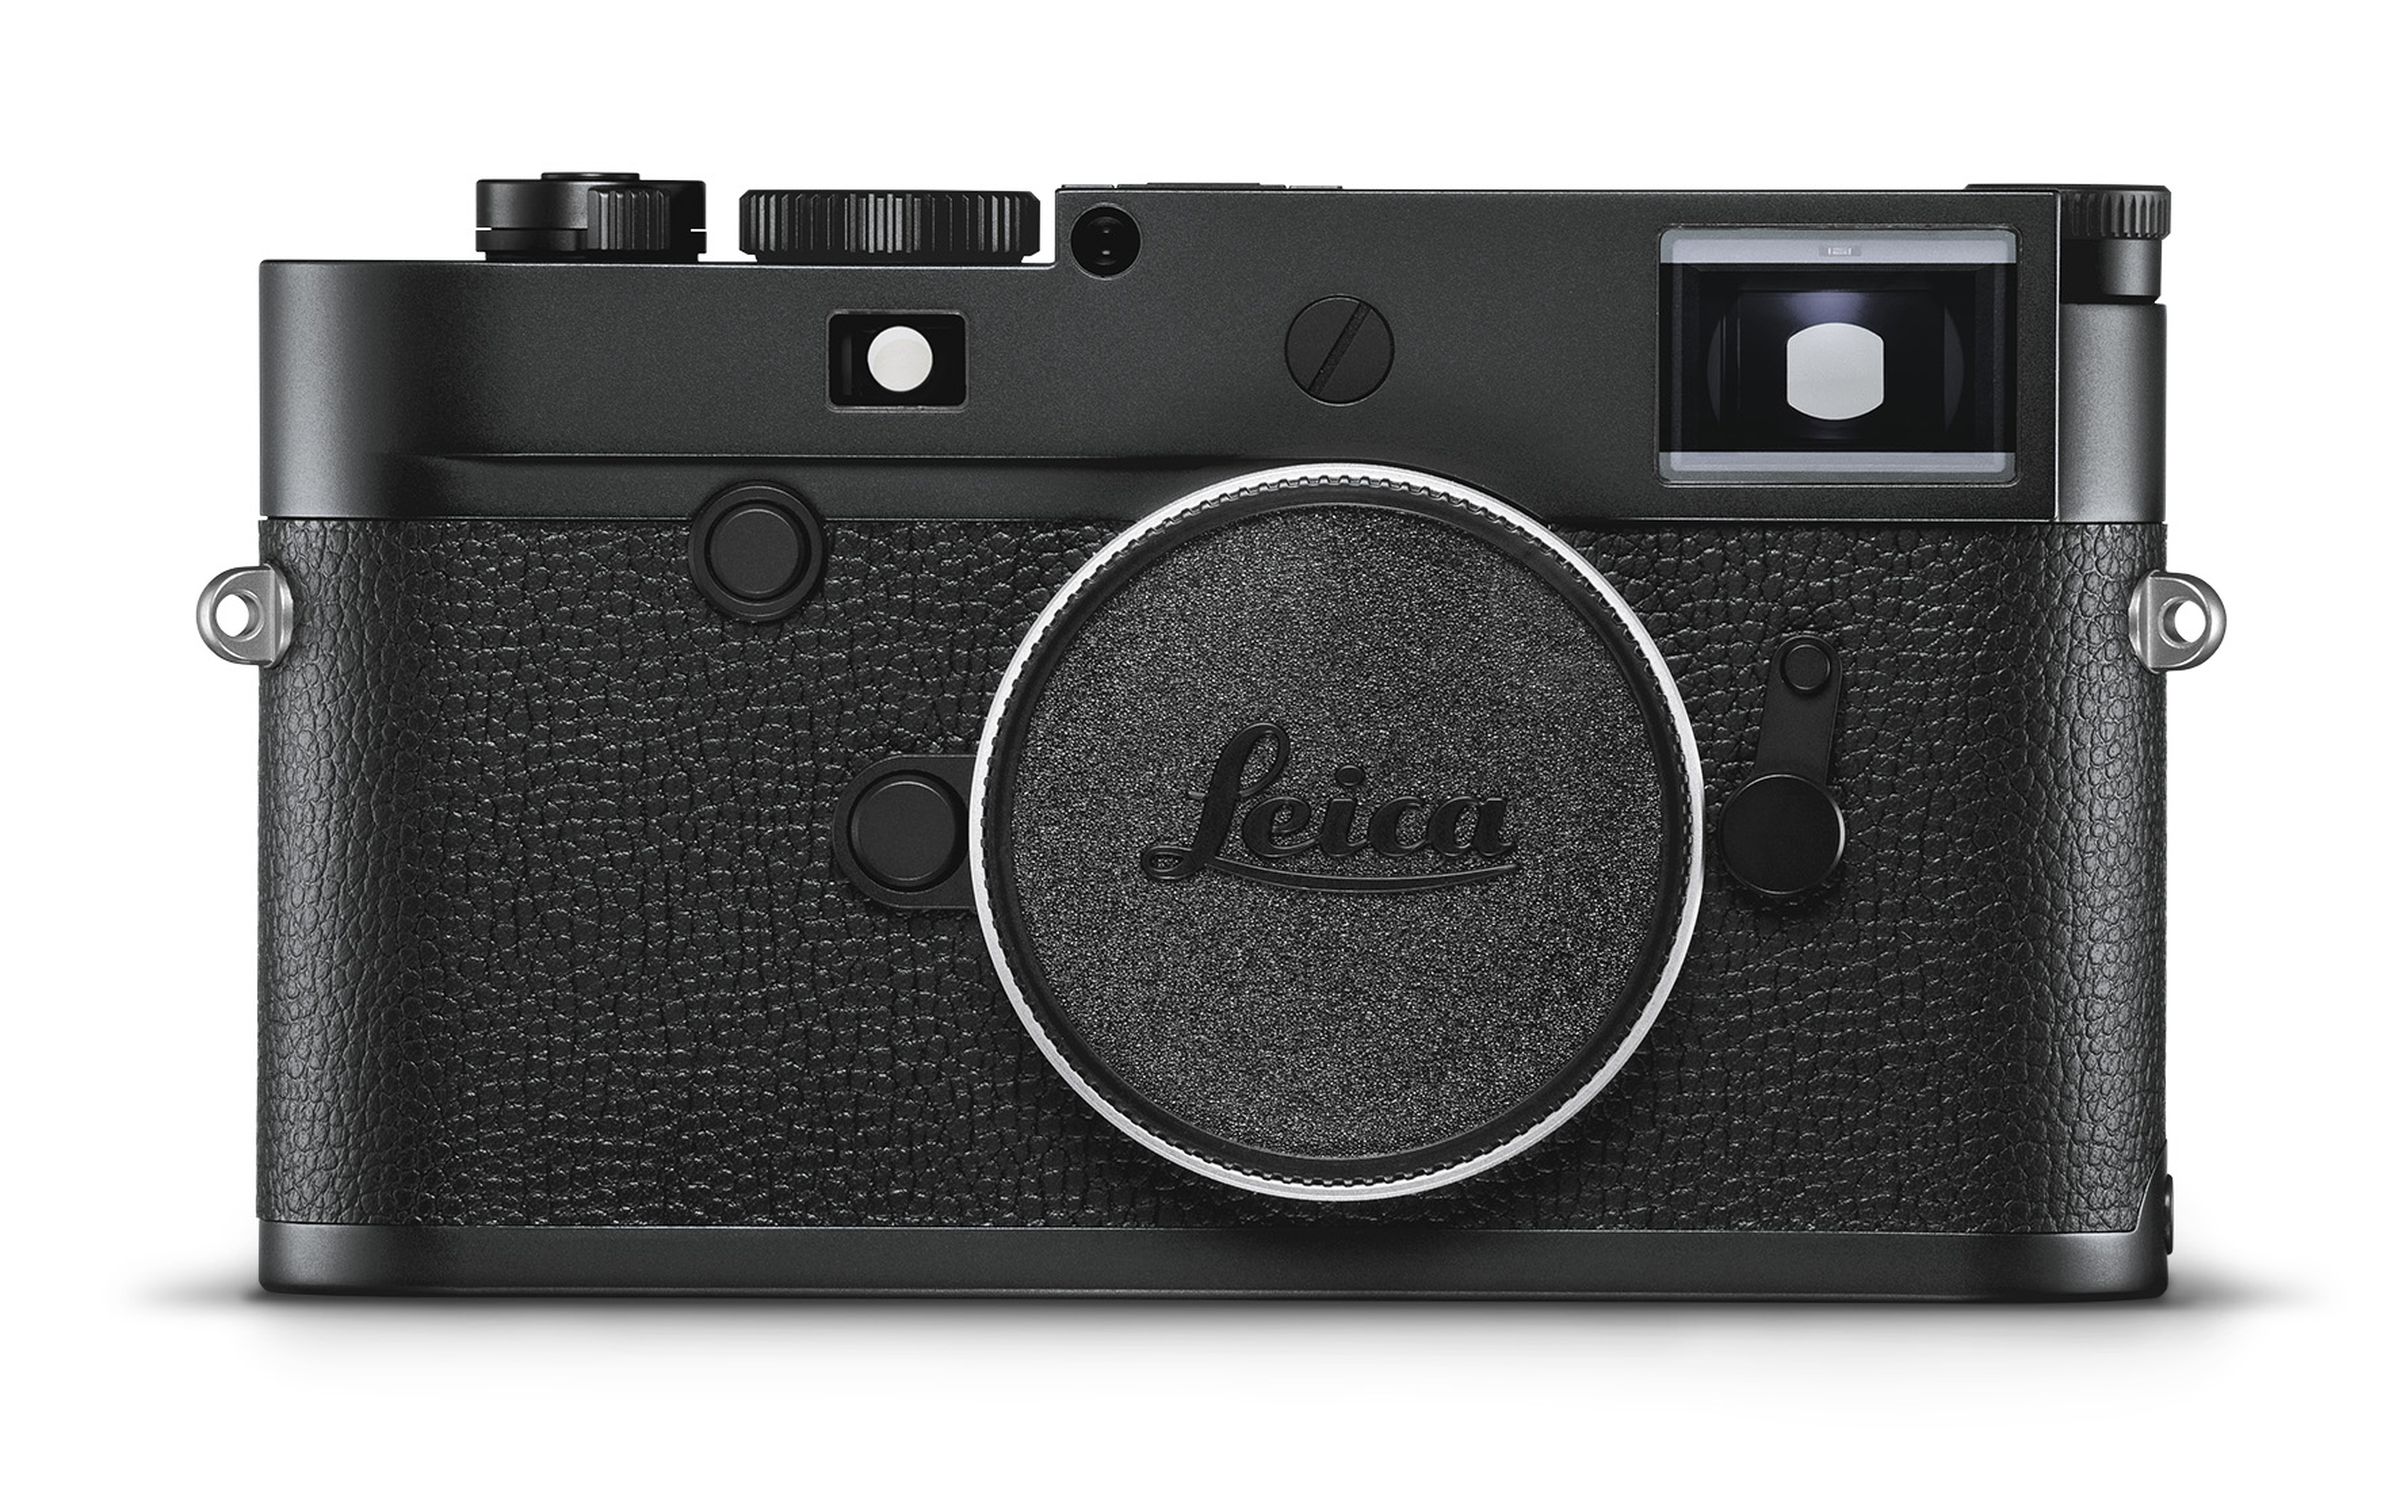 Leica M10 Monochrom front